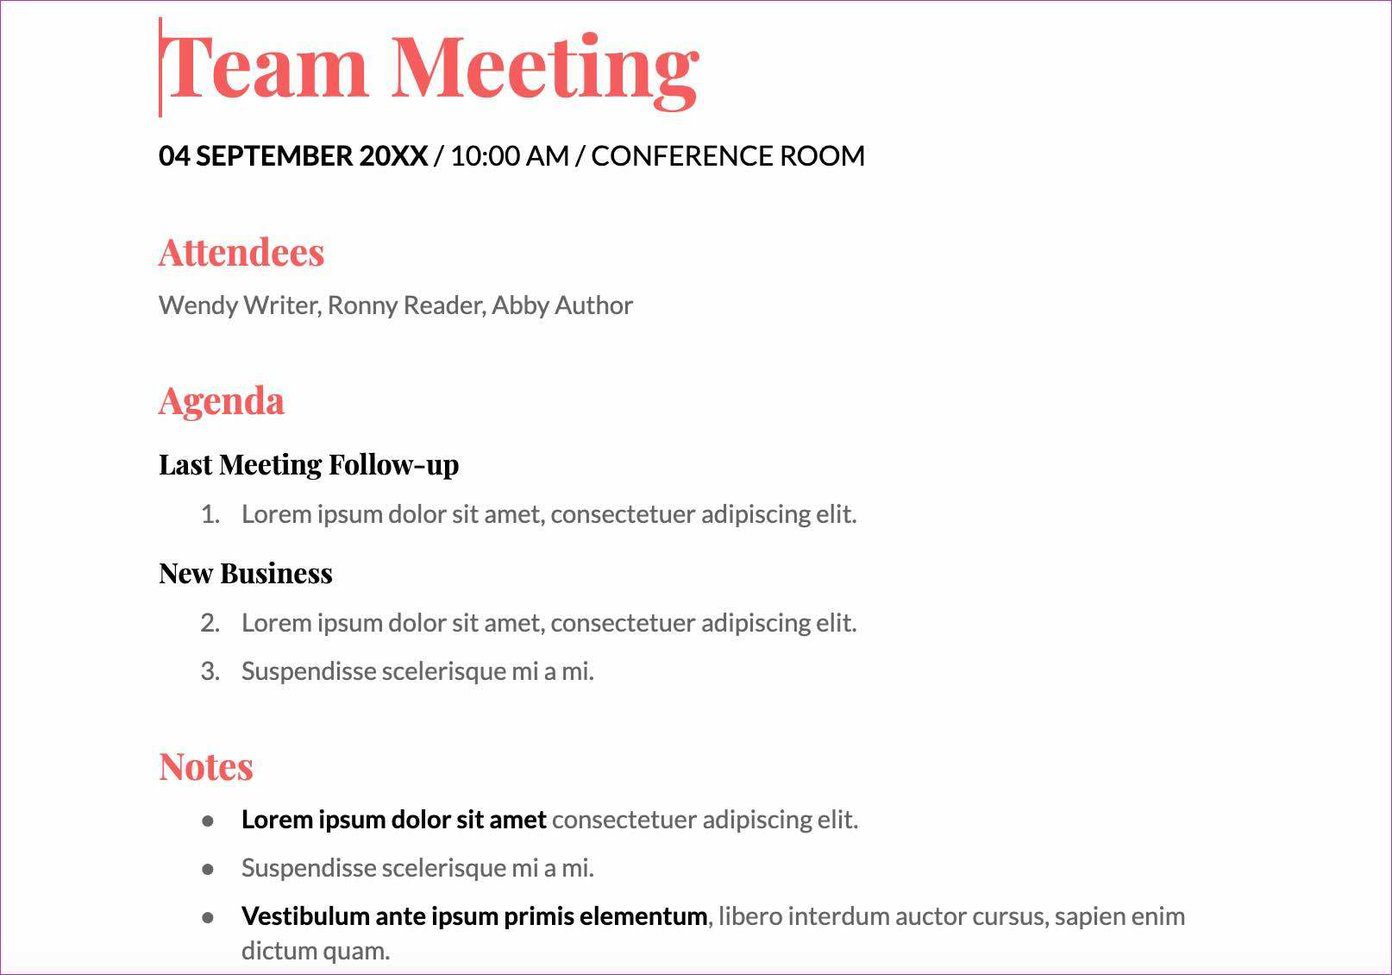 Team meeting template for google docs